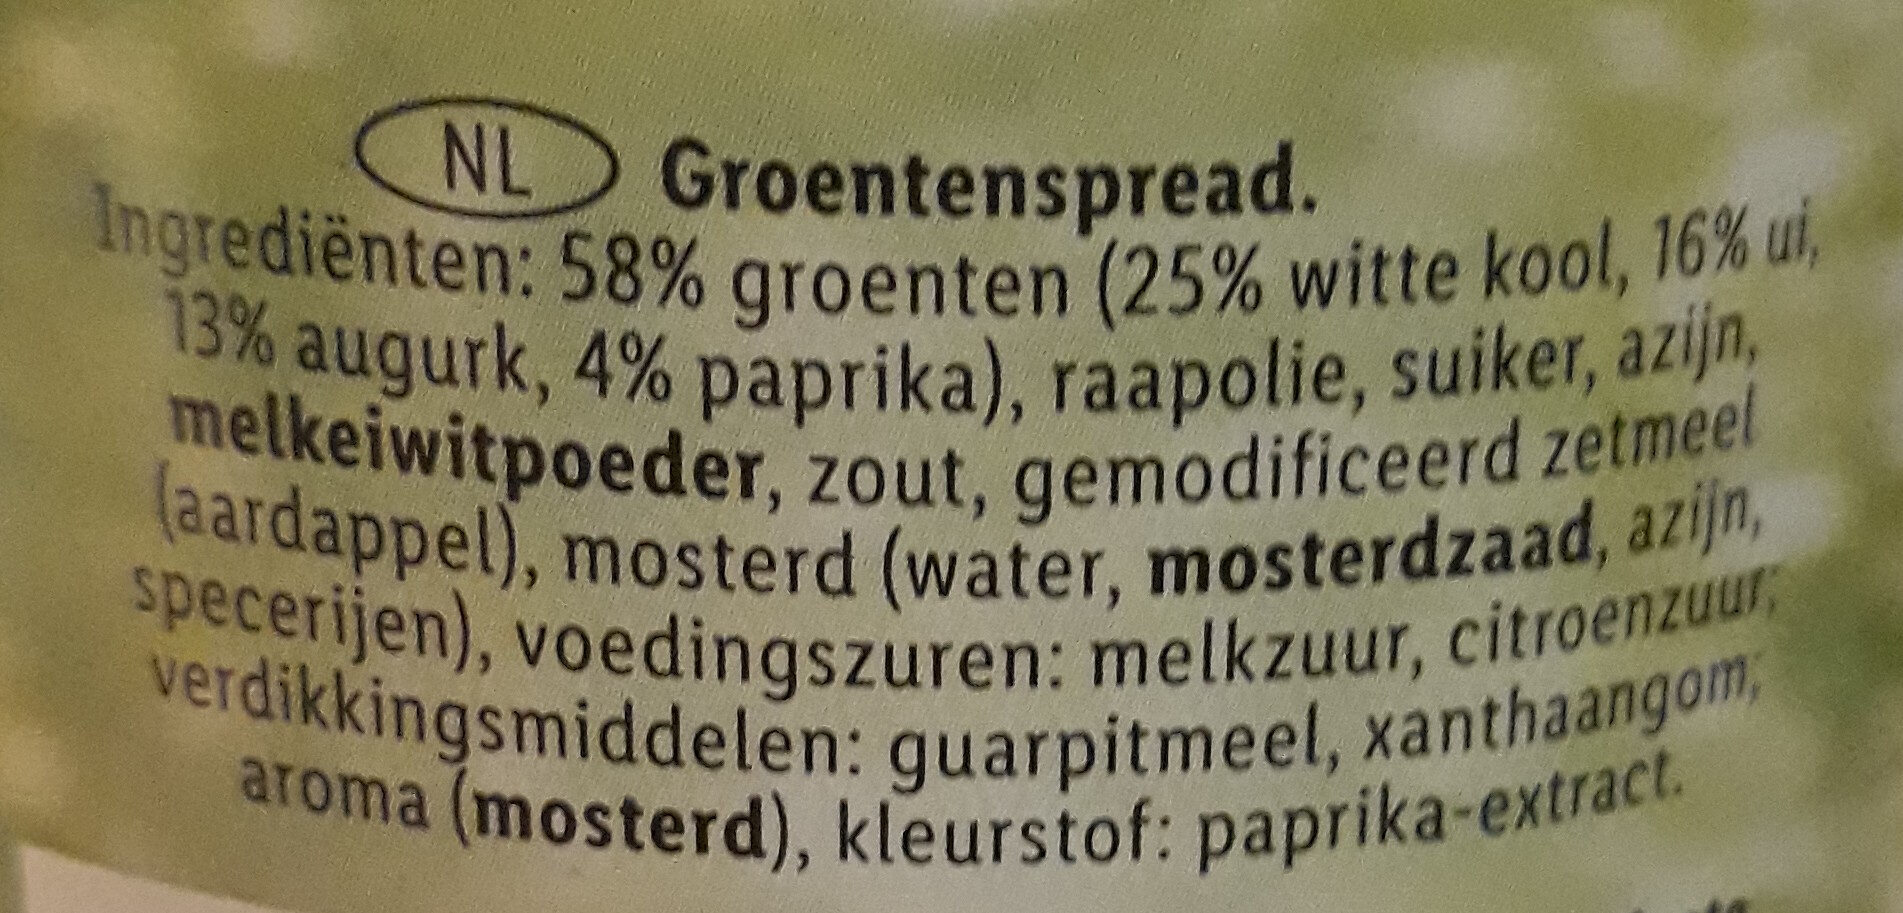 veggie spread - Ingredients - nl